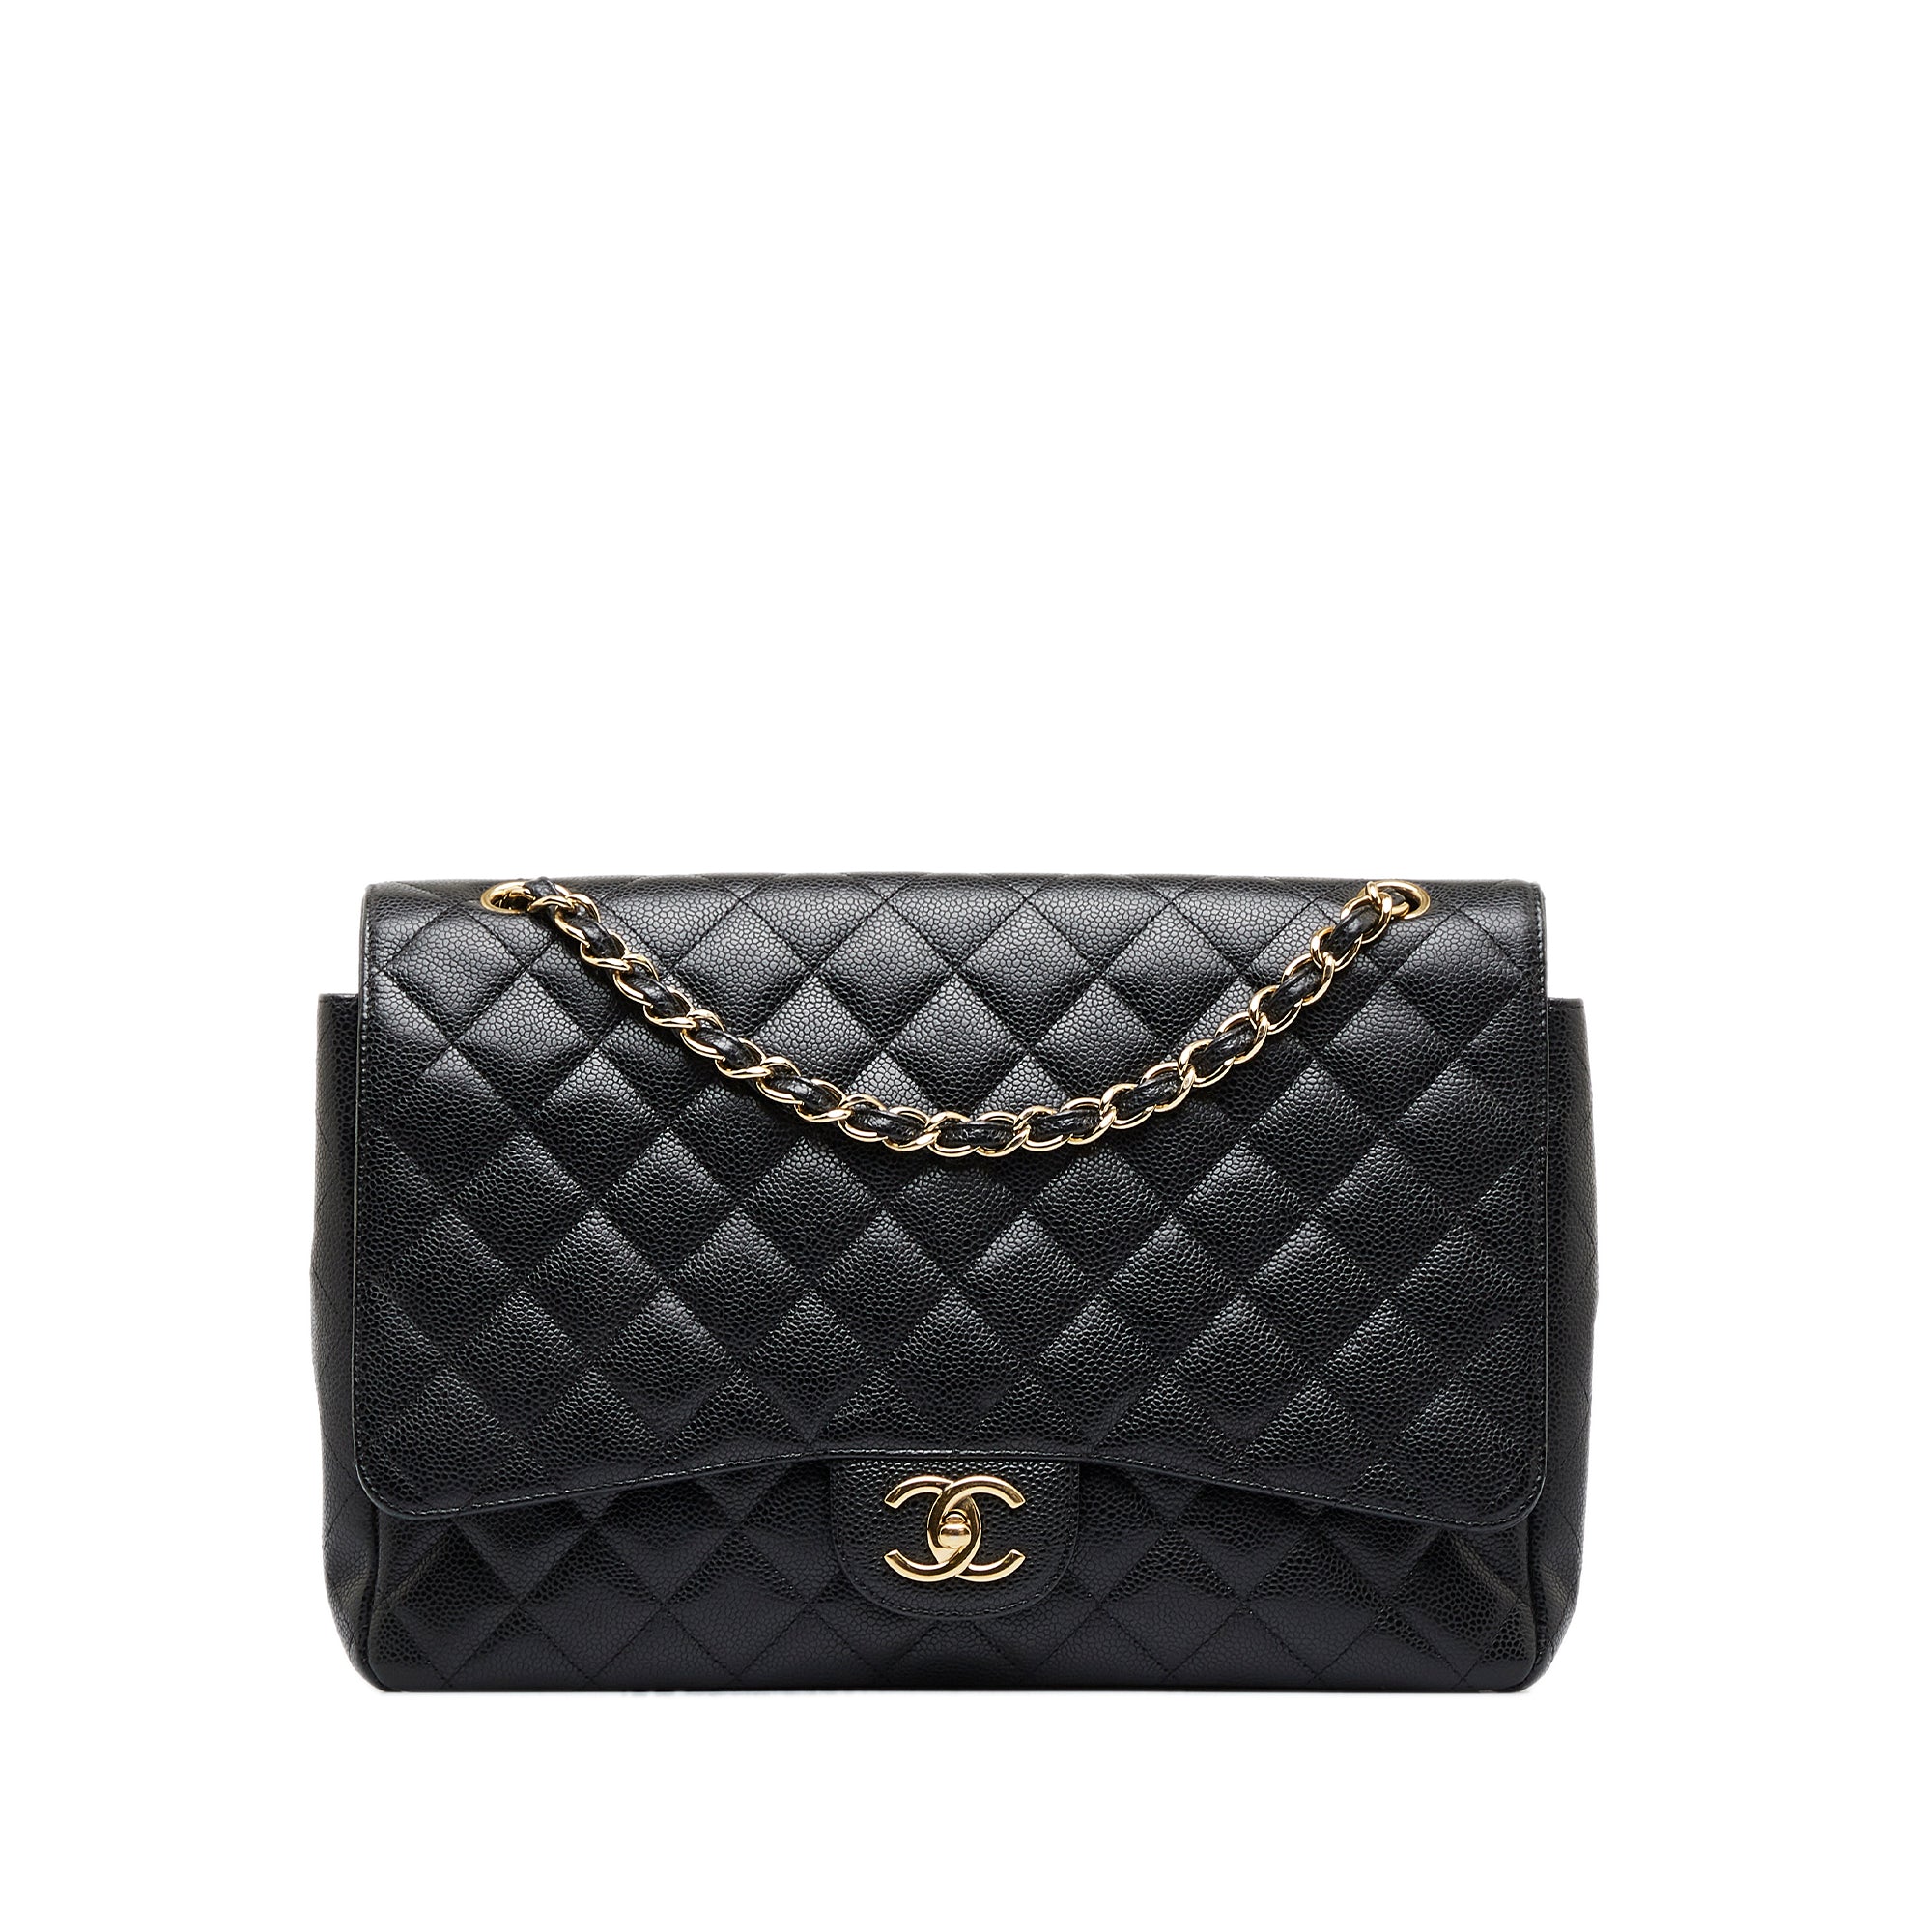 Sell Chanel Maxi Caviar Classic Double Flap Shoulder Bag - Black